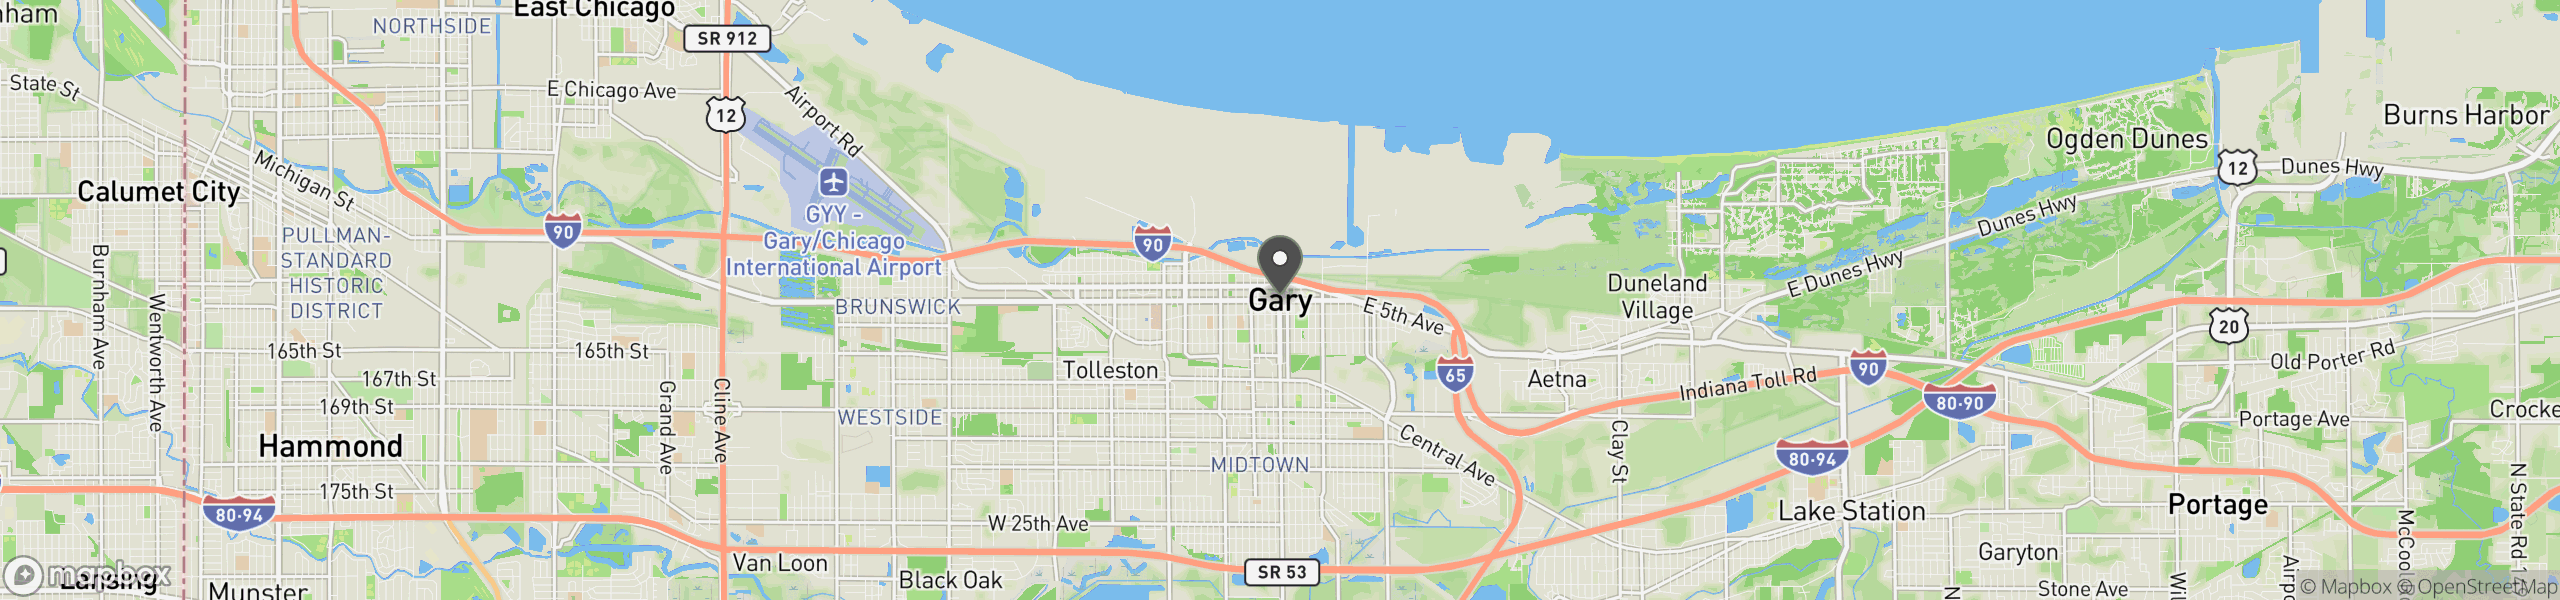 Gary, IN 46401